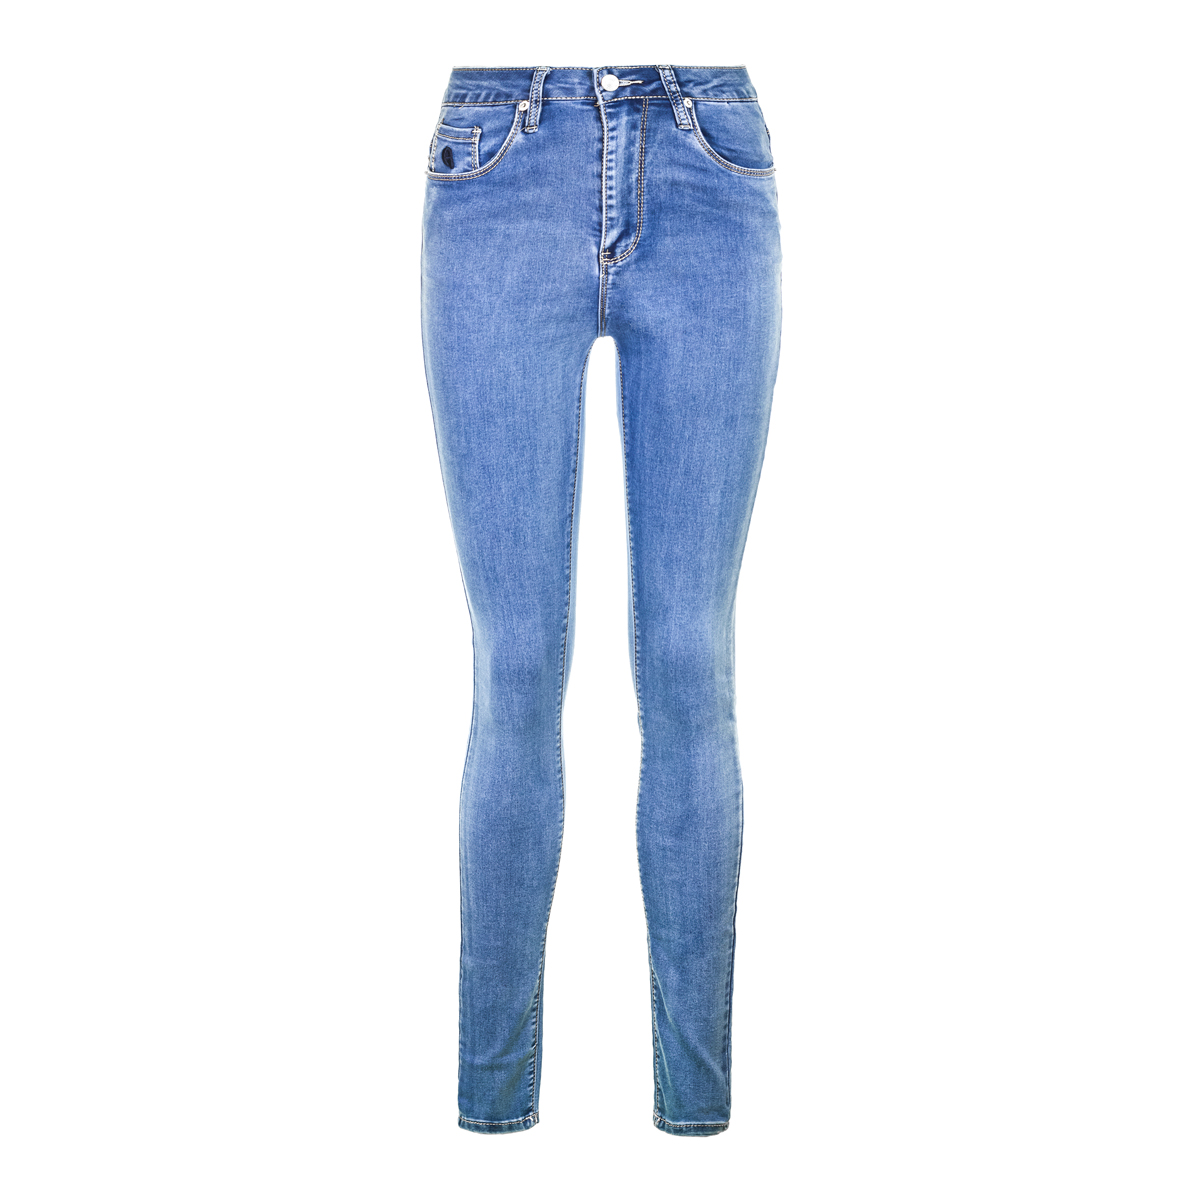 Жен. джинсы арт. 12-0086 Голубой р. 29 Китай, размер 29